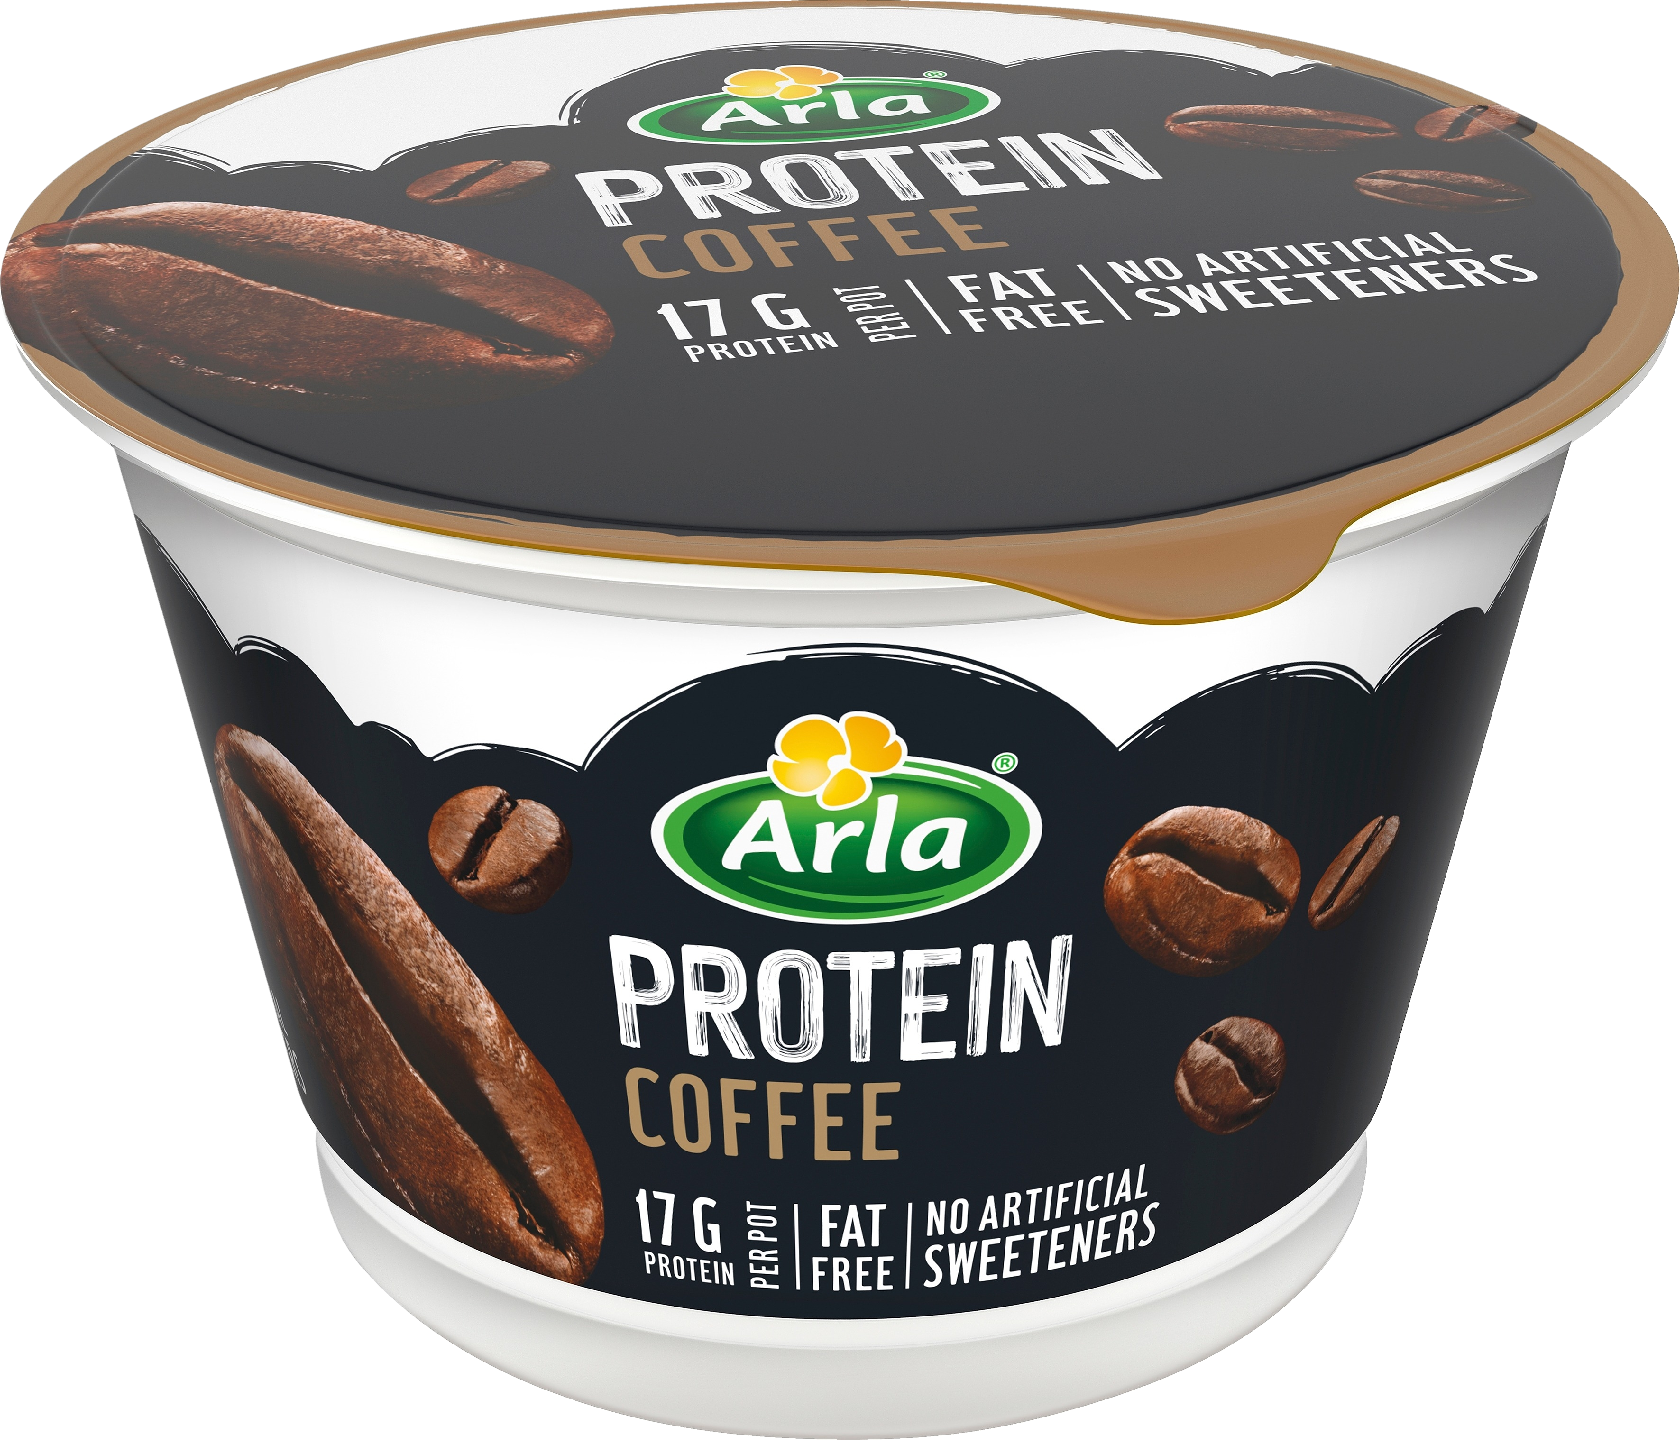 Arla Protein rahka 200g kahvi laktoositon